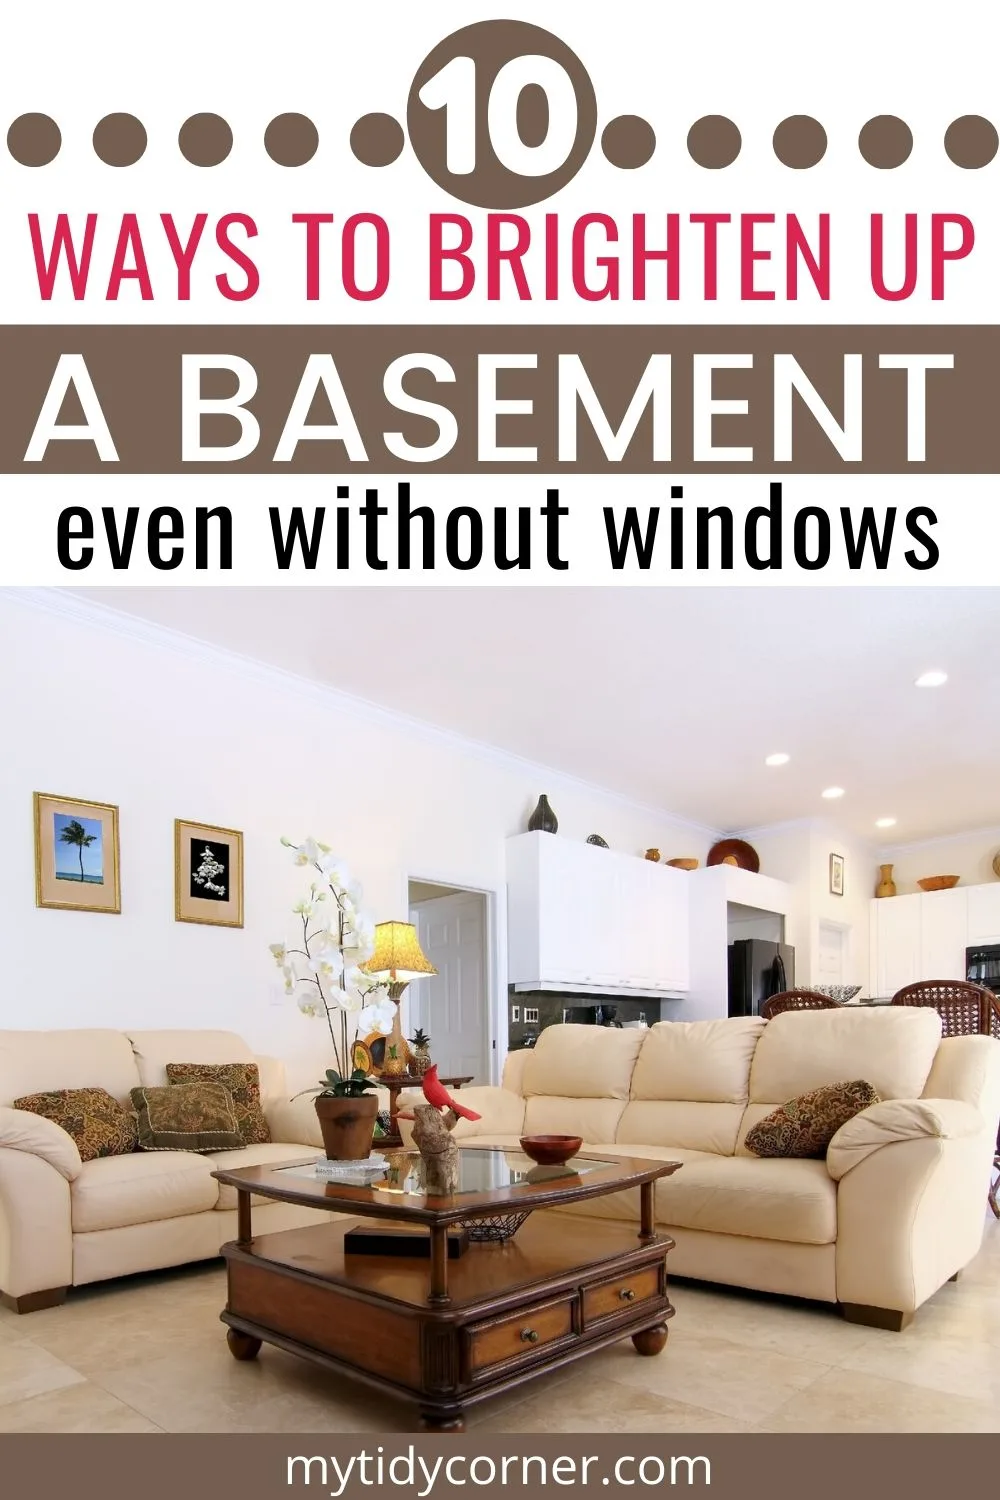 Ways to brighten up a basement